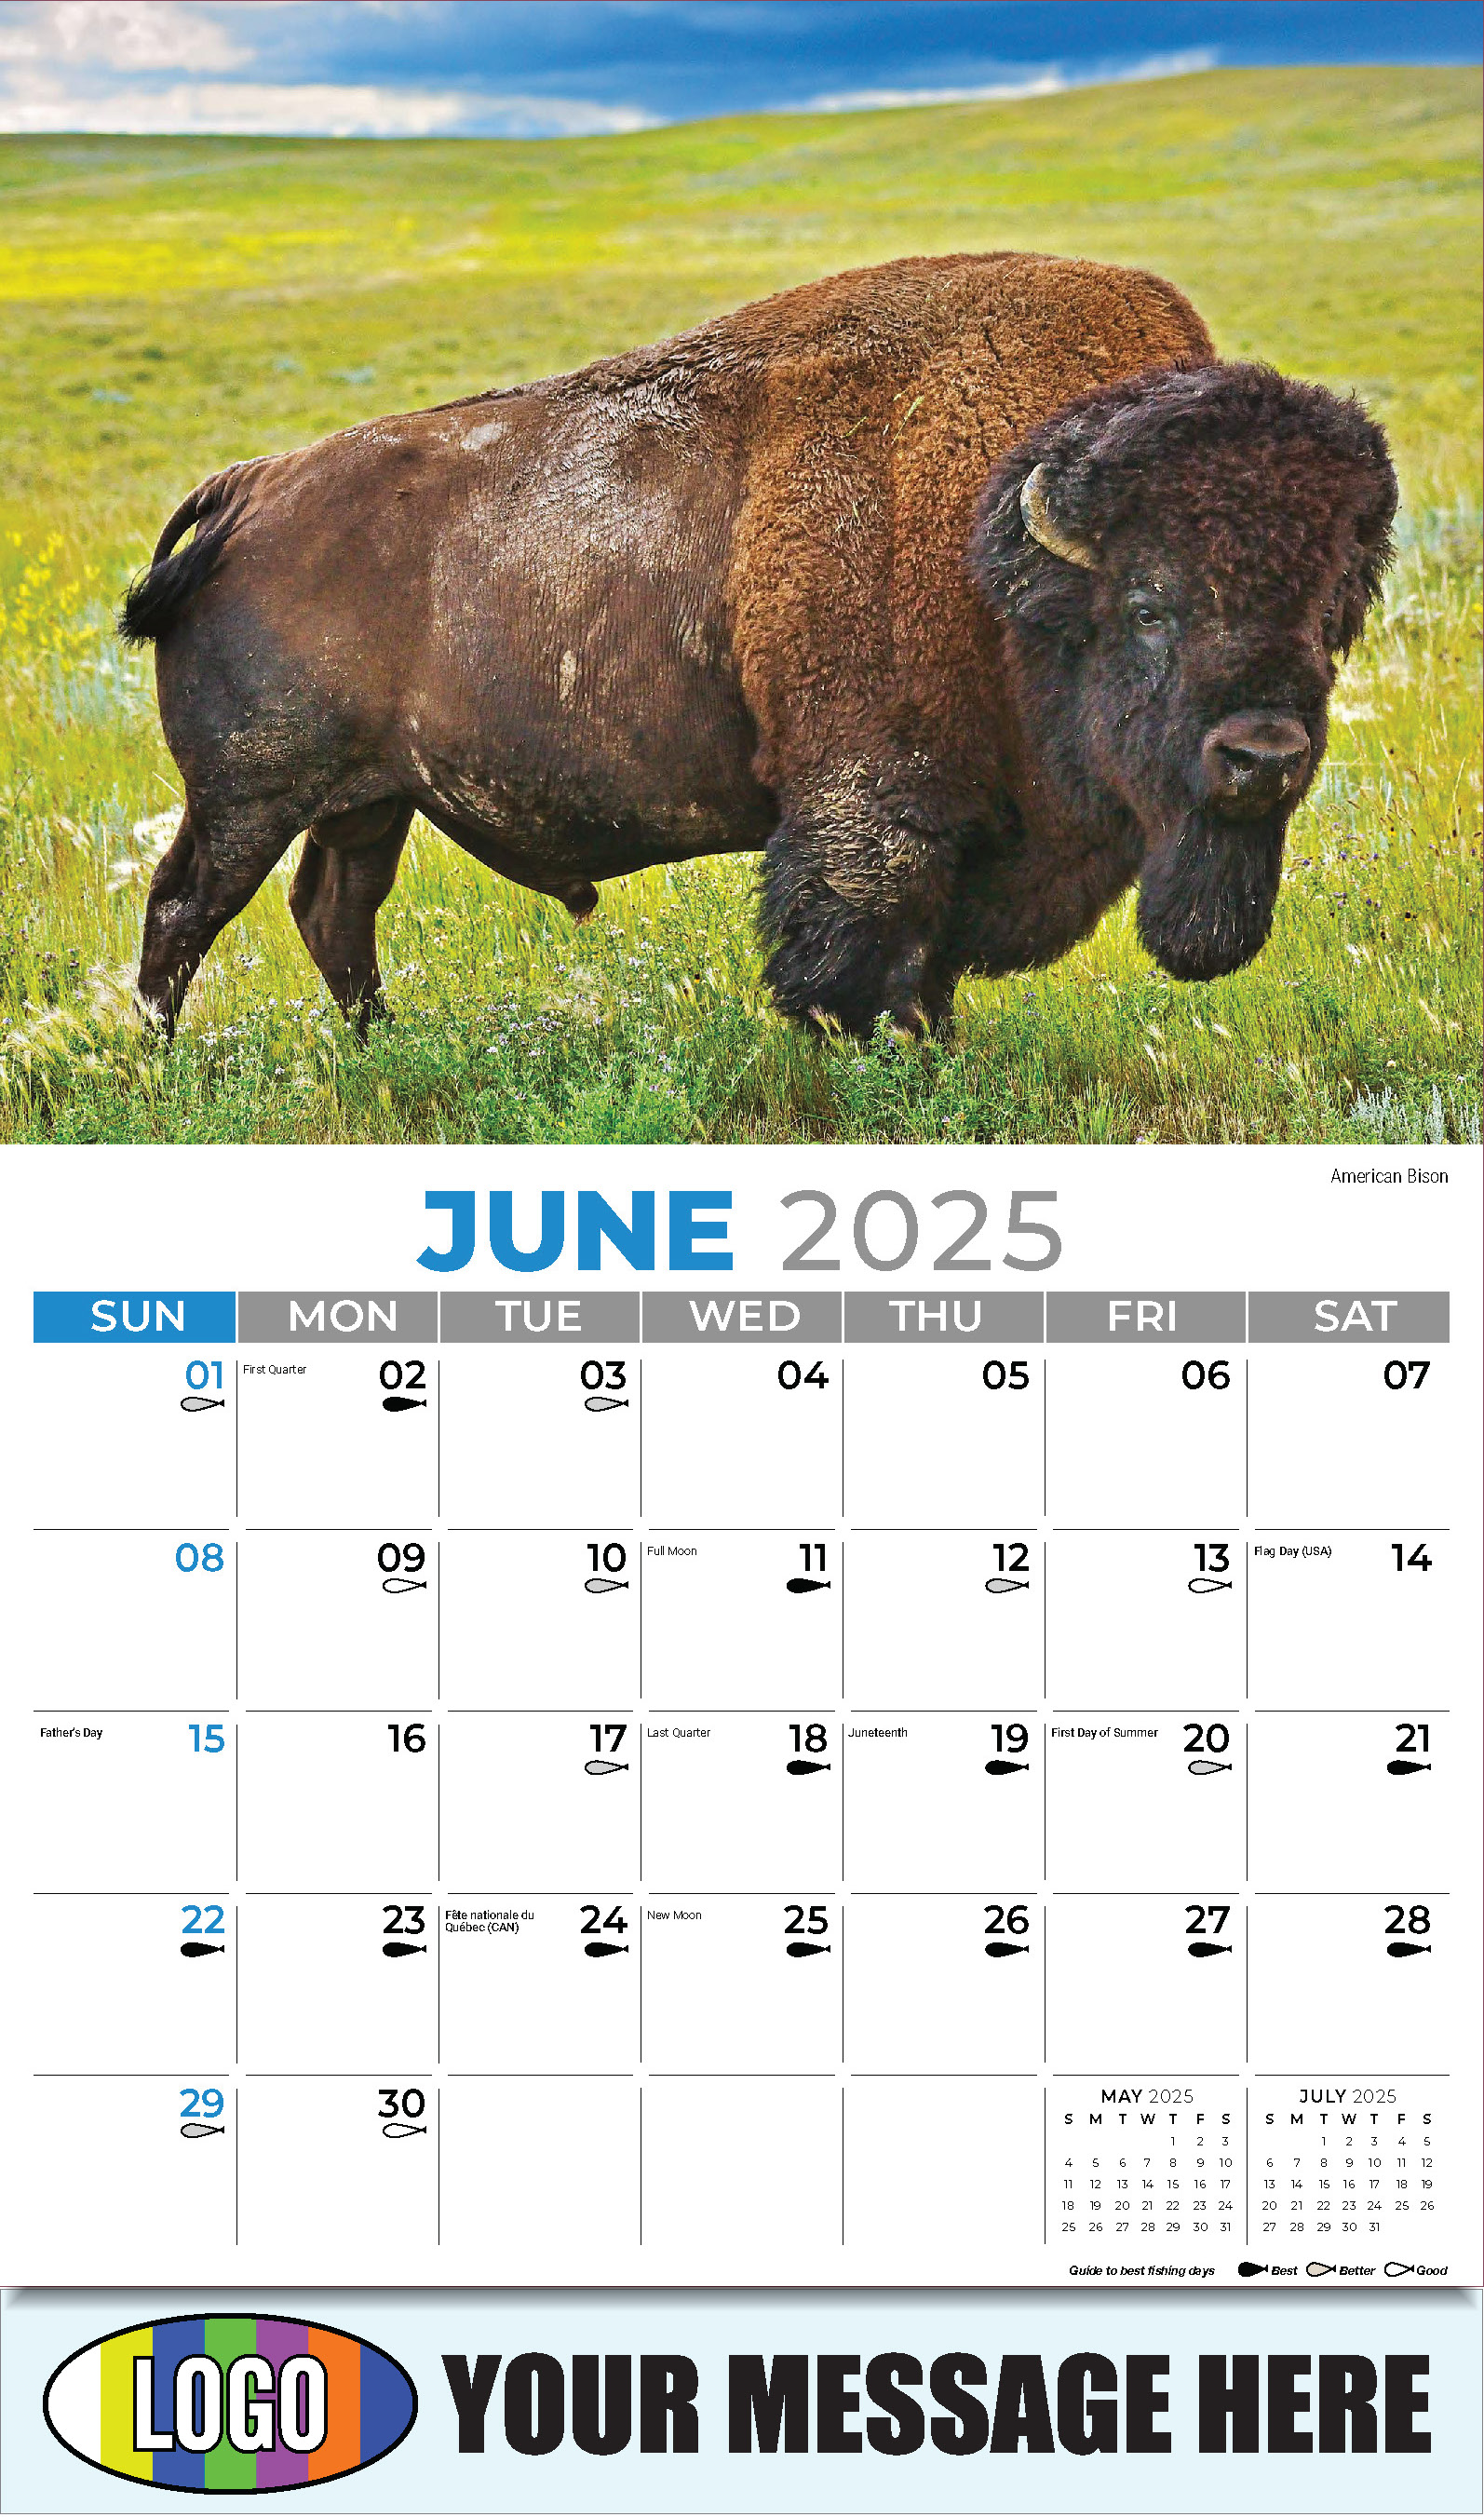 North American Wildlife 2025 Business Promo Wall Calendar - June